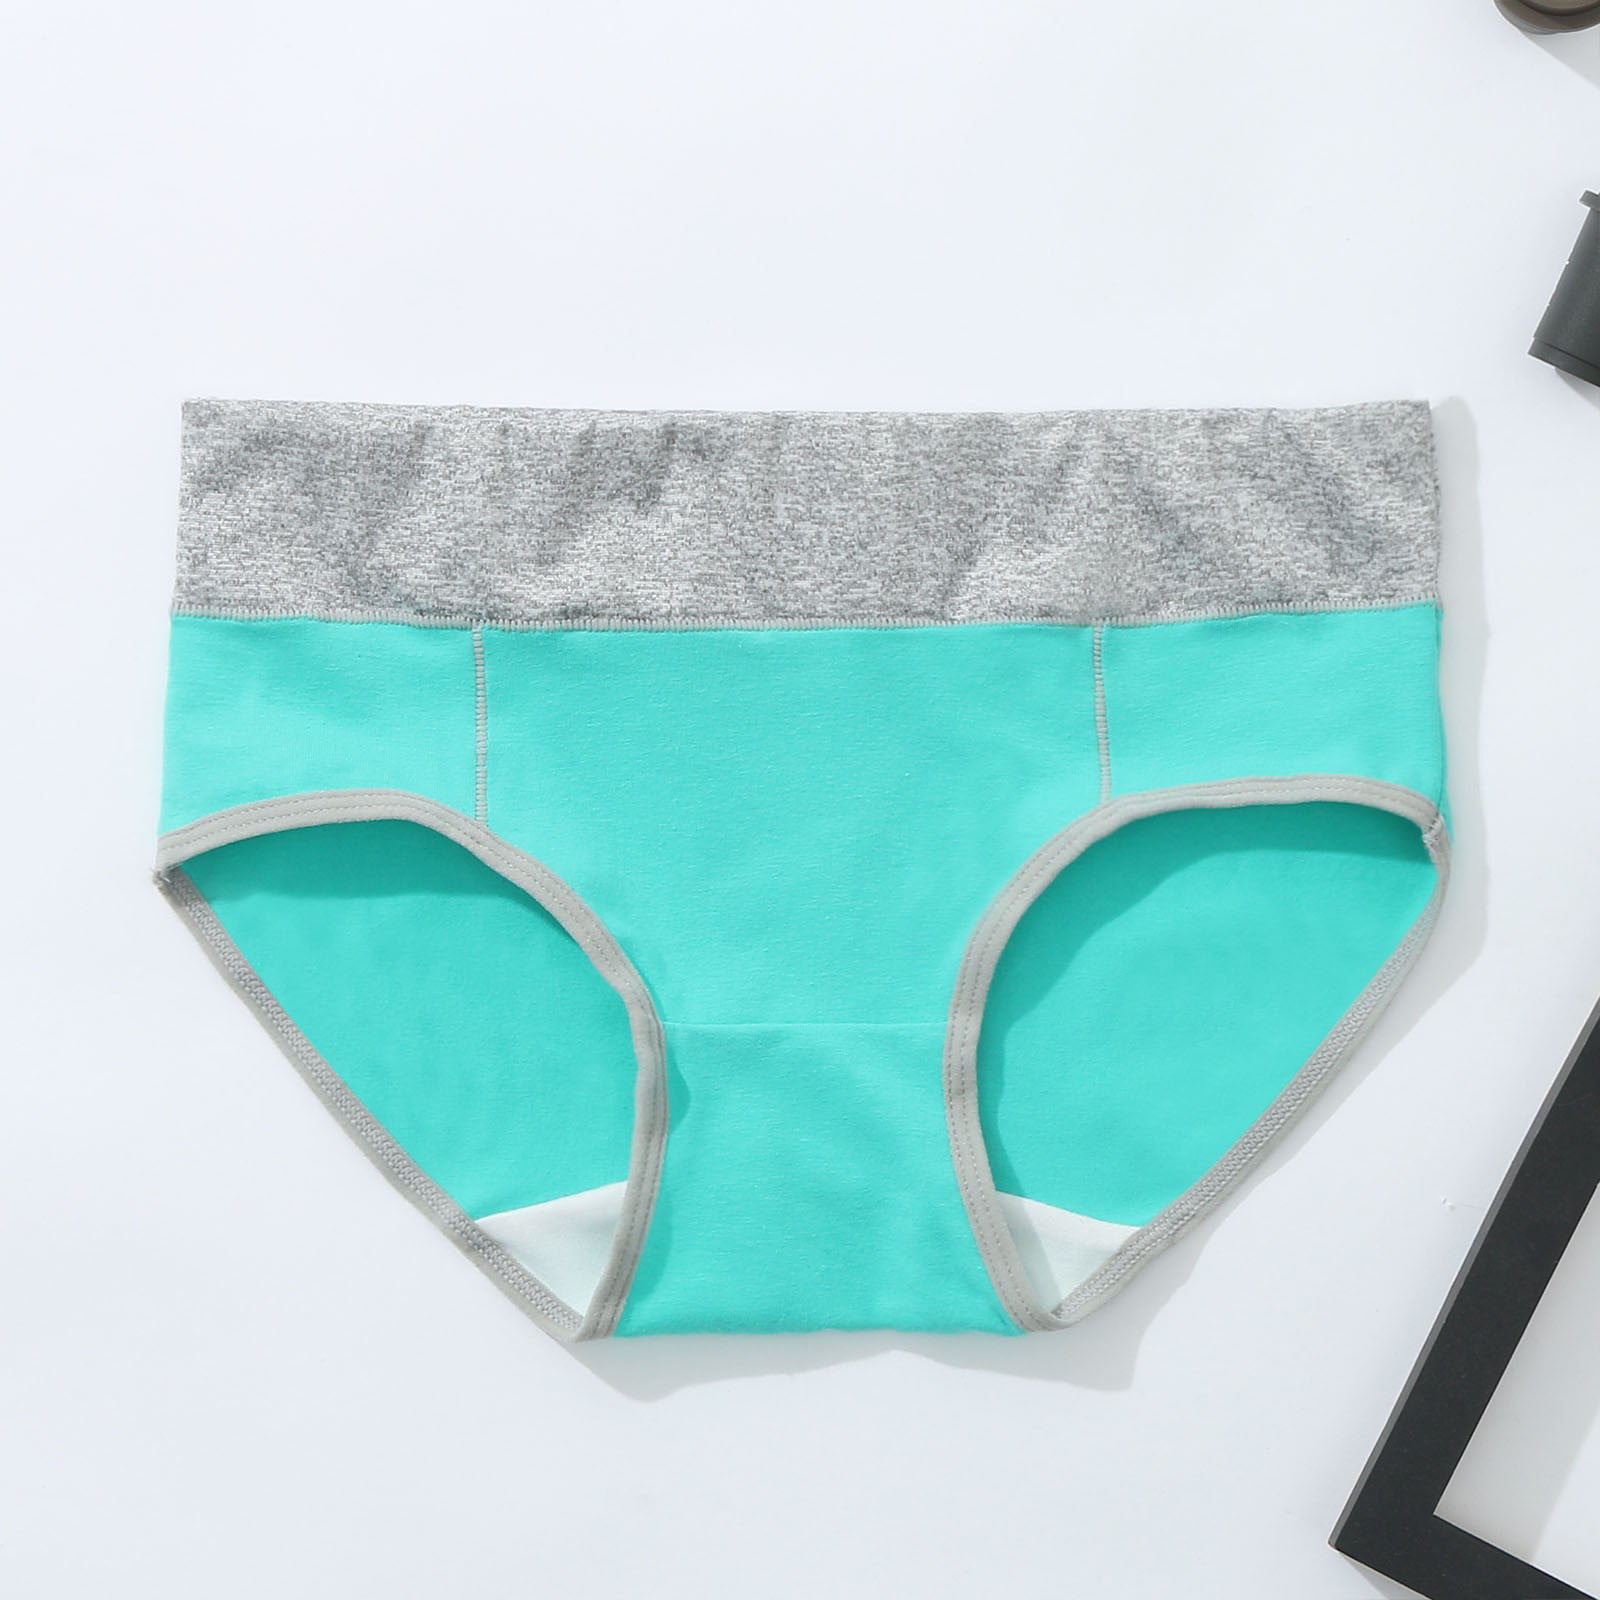 Ruidigrace Fashion Women Underwear Brief Solid Color Patchwork Panties  Knickers Bikini Underpants 